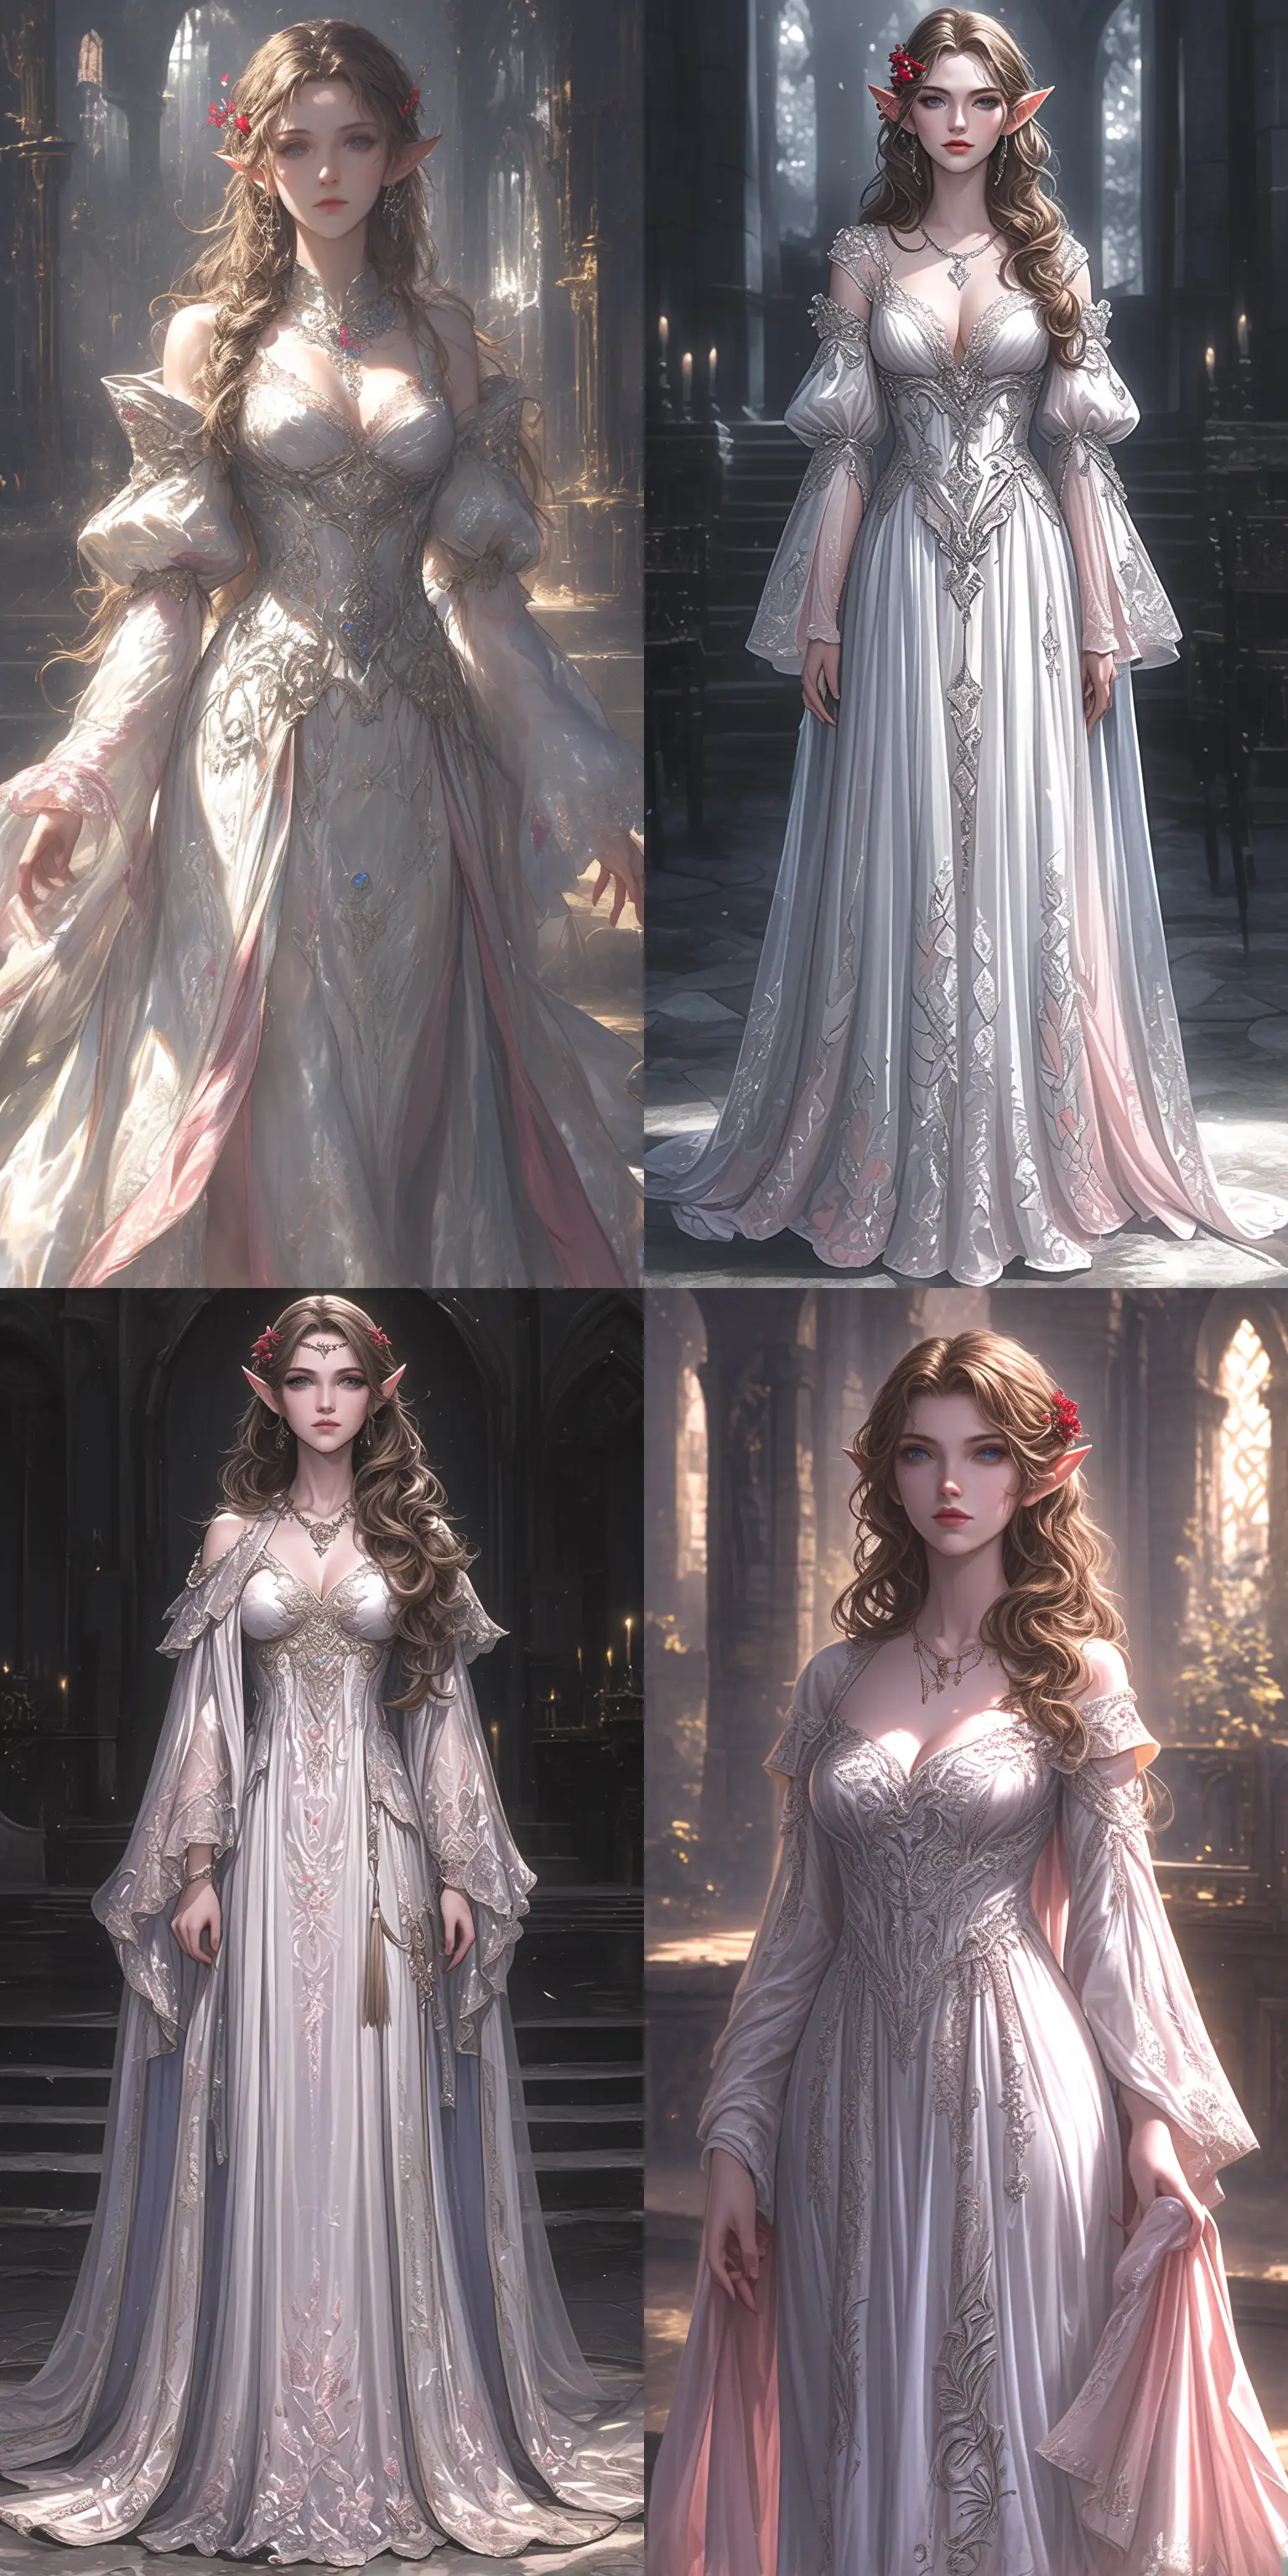 Enchanting-Elf-Woman-in-Elvish-Dress-Amidst-Ancient-Castle-Ballroom